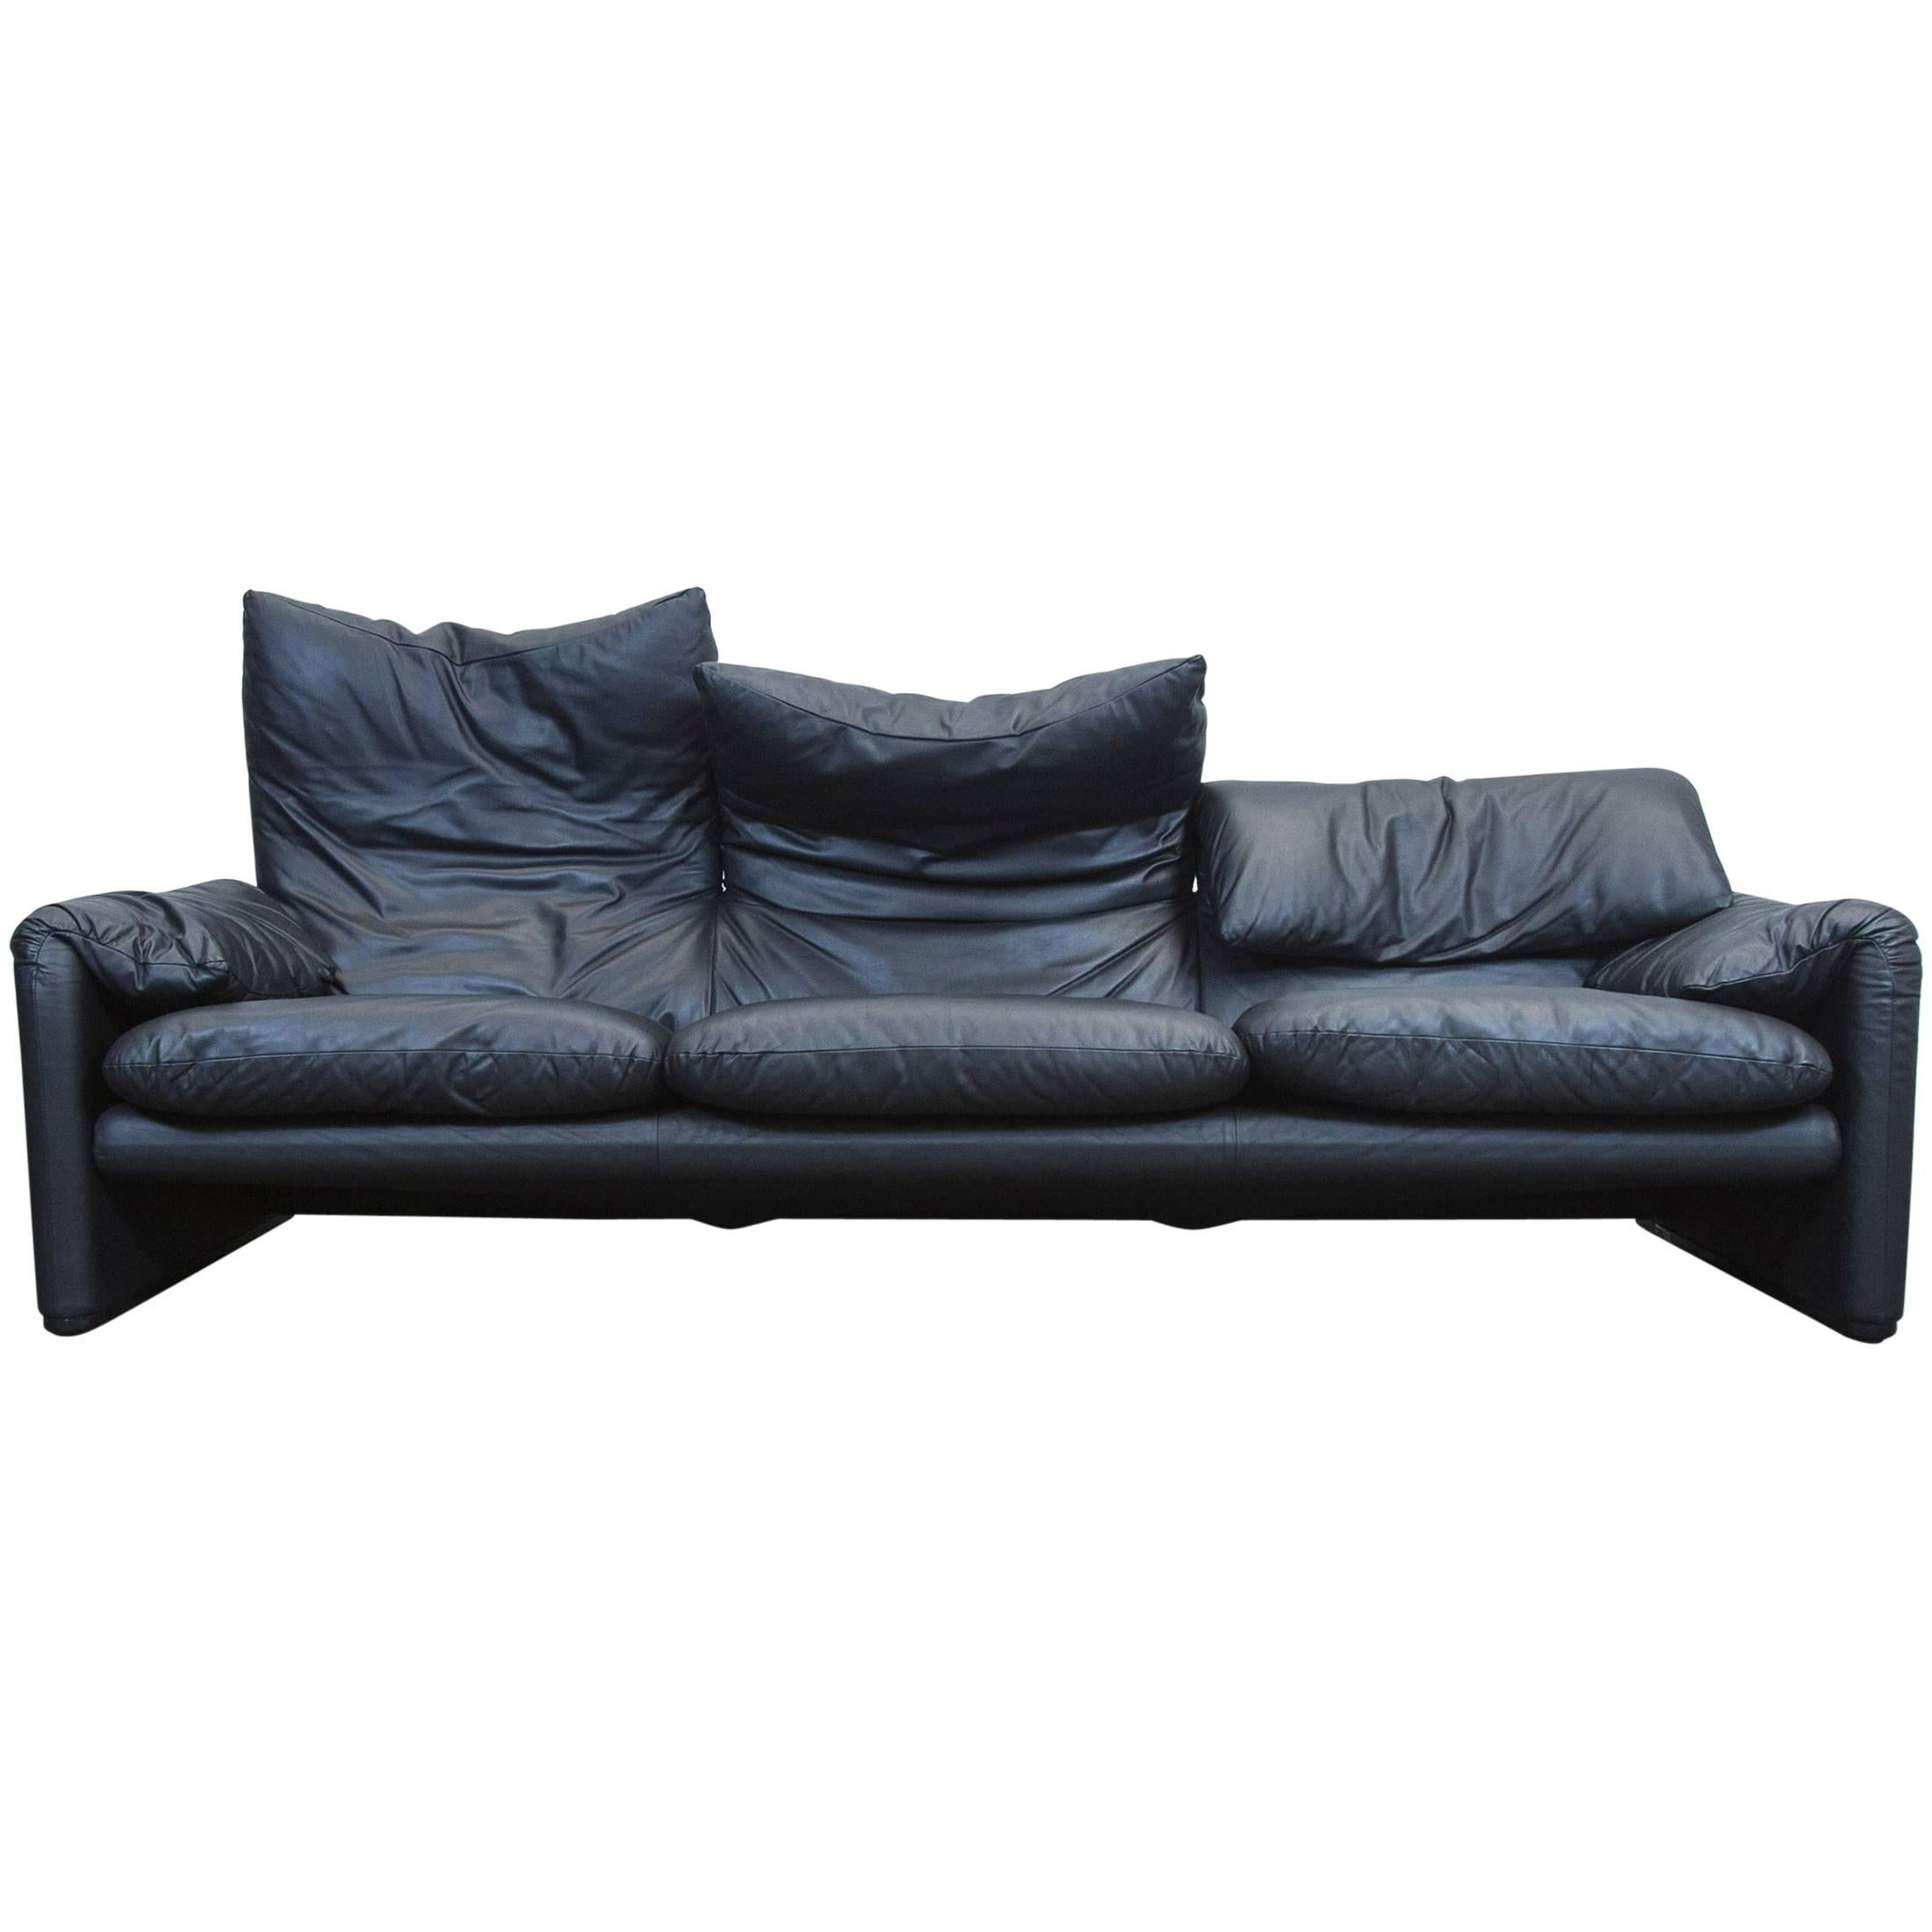 Cassina Maralunga Designer Sofa Black Leather Three-Seat Couch Function Modern